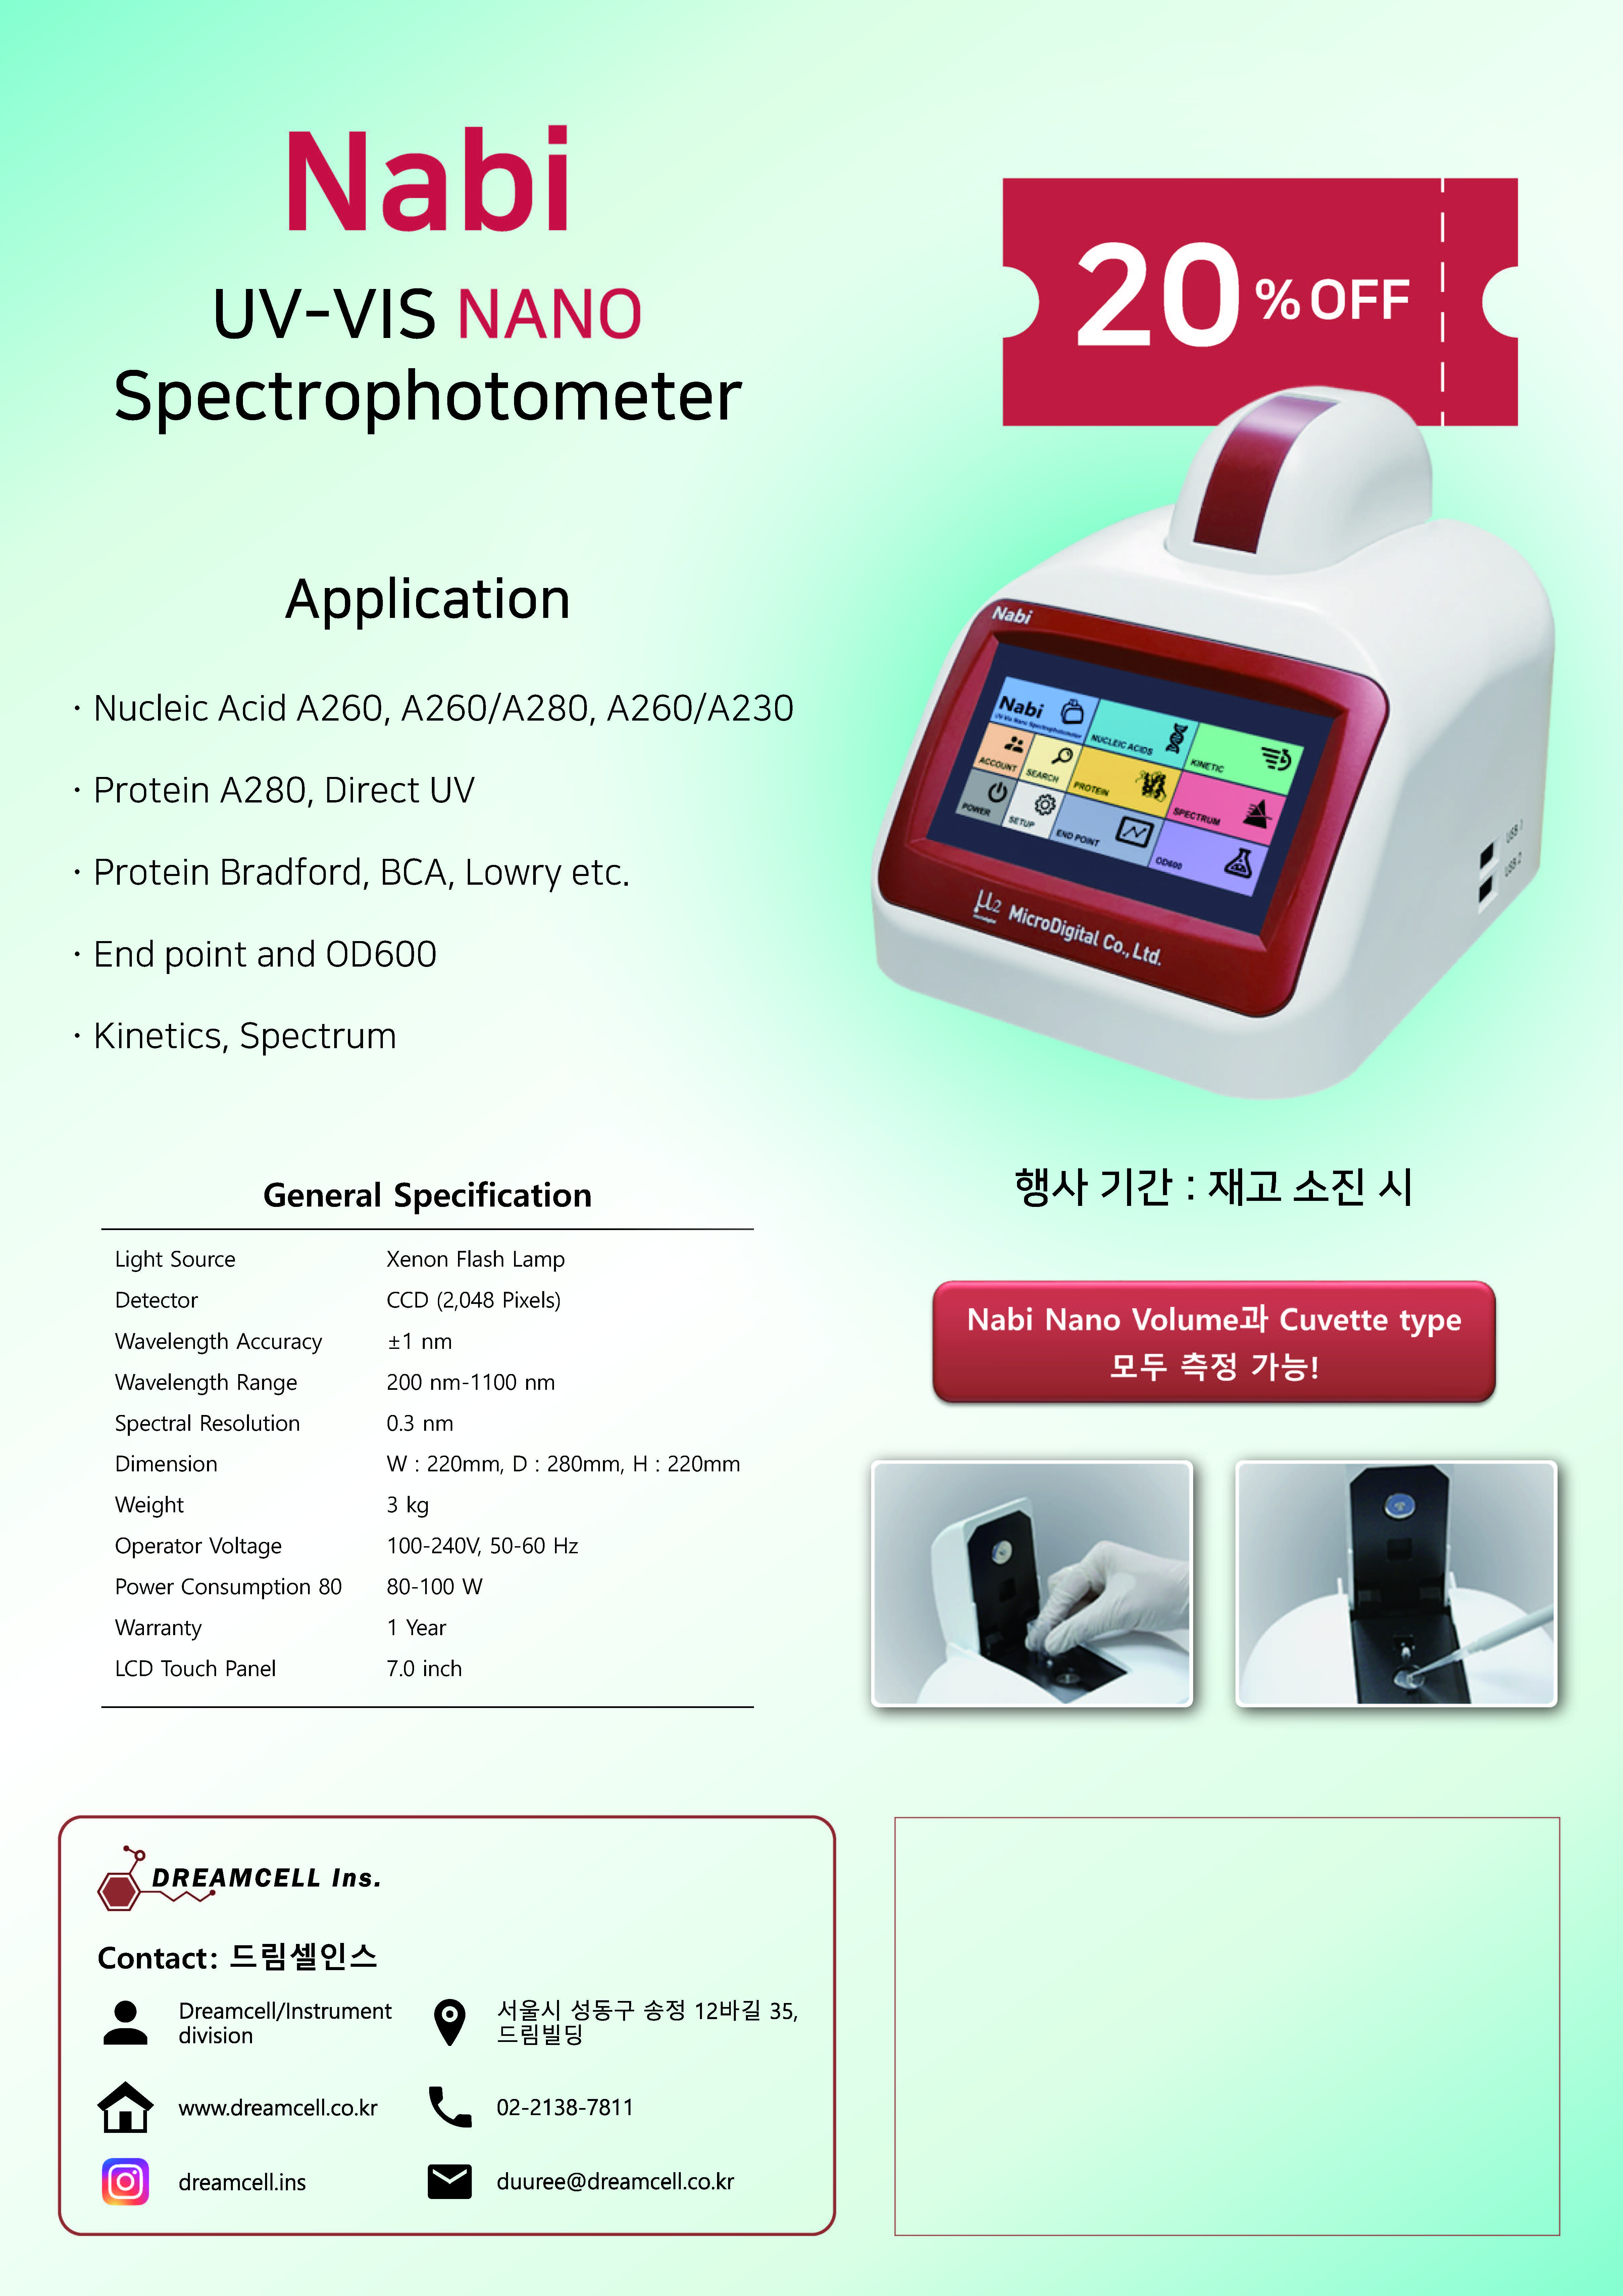 [Microdigital] - NABI UV-VIS NANO Spectrophotometer Promotion